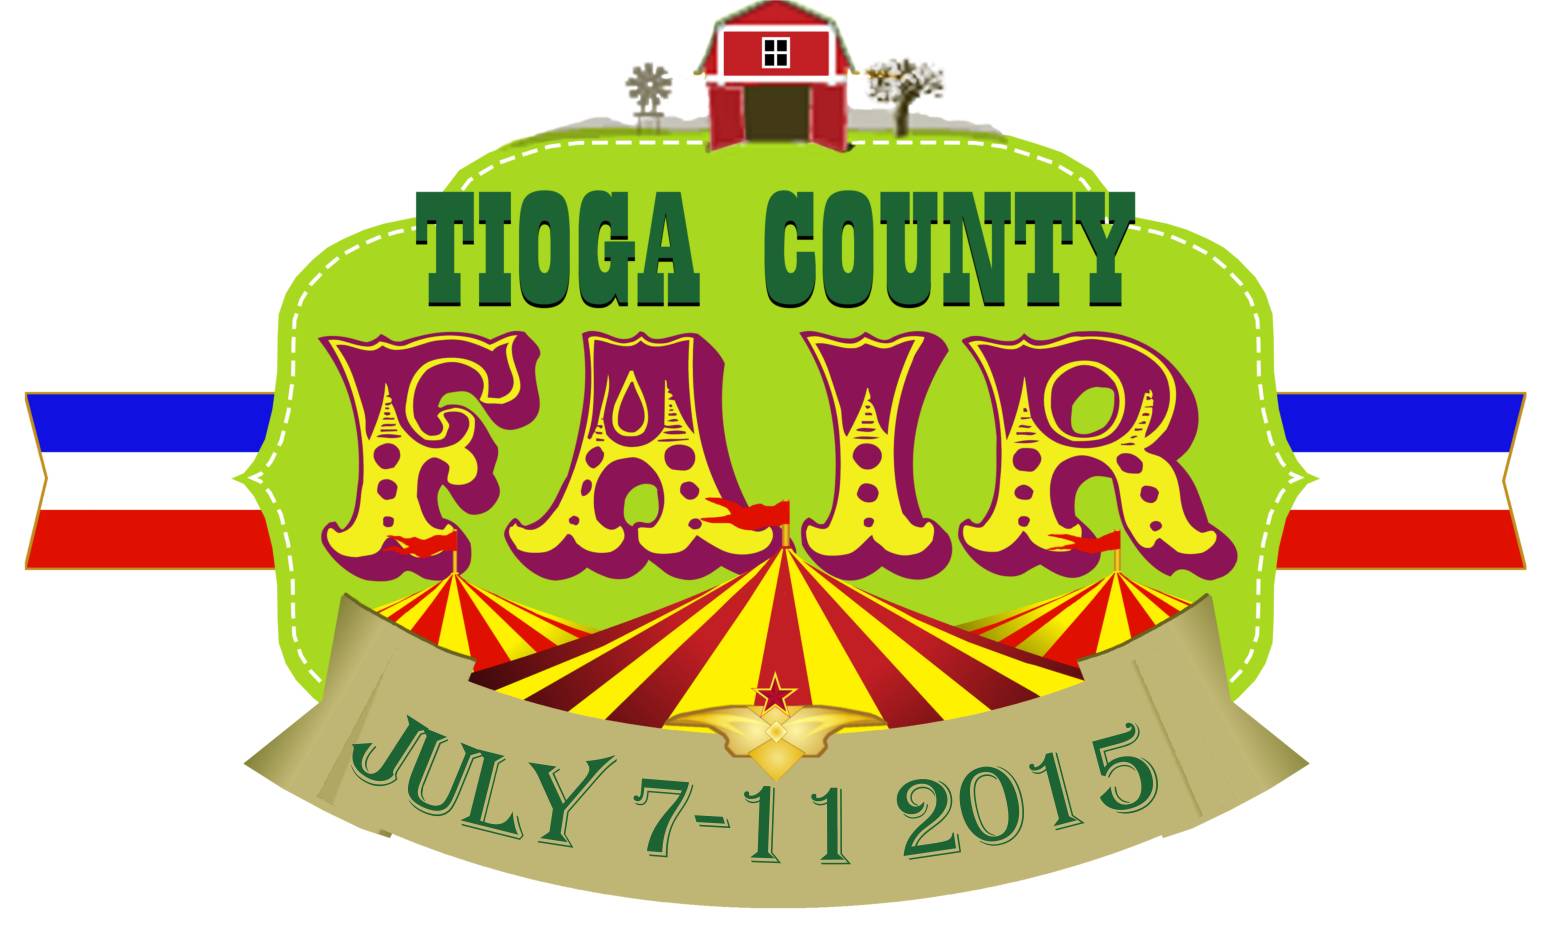 Visit the Tioga County Fair!